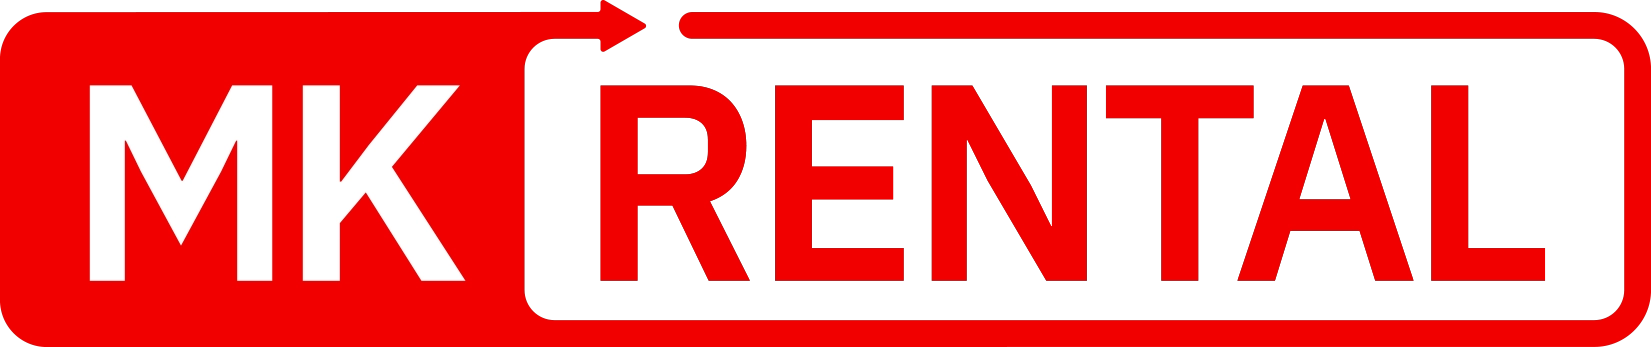 mk rental logo